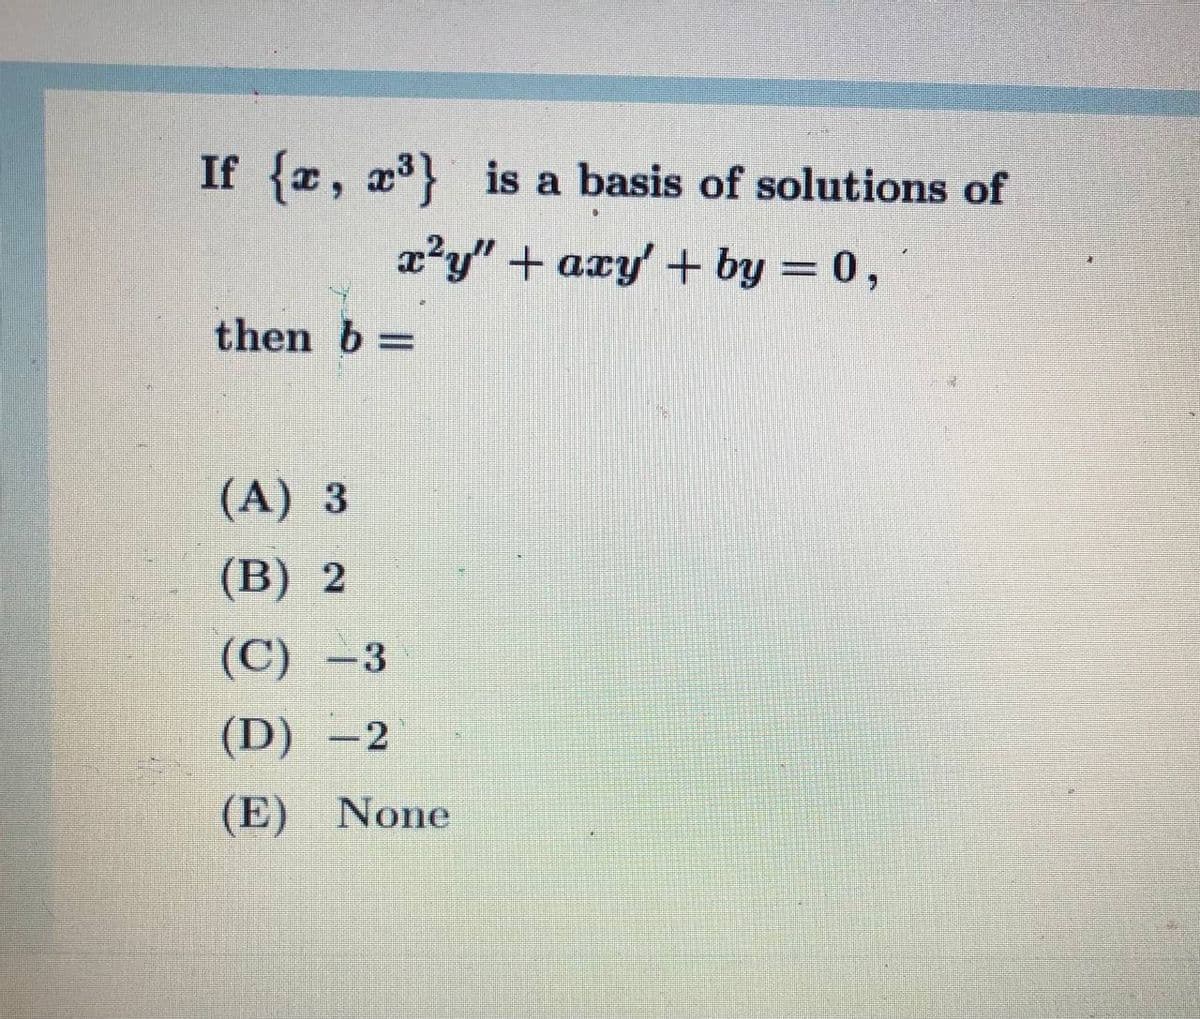 If {x, x} is a basis of solutions of
x?y" + axy' + by = 0,
then b =
(A) 3
(B) 2
(C) -3
(D) -2
(E) None
